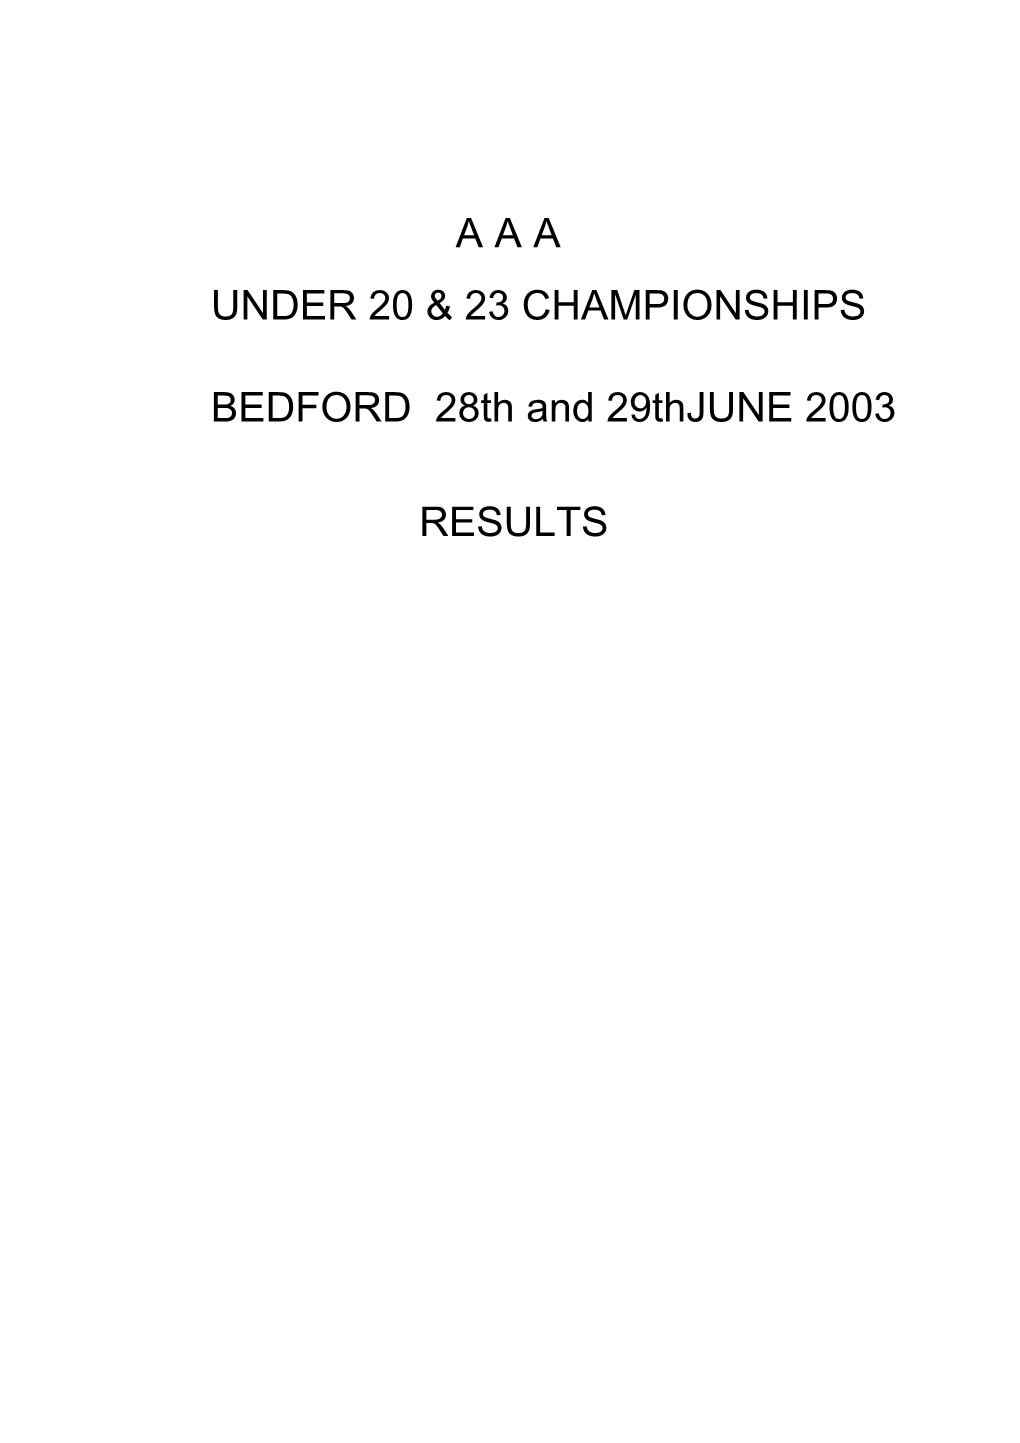 Bedford Track Results 28.29 June 2003